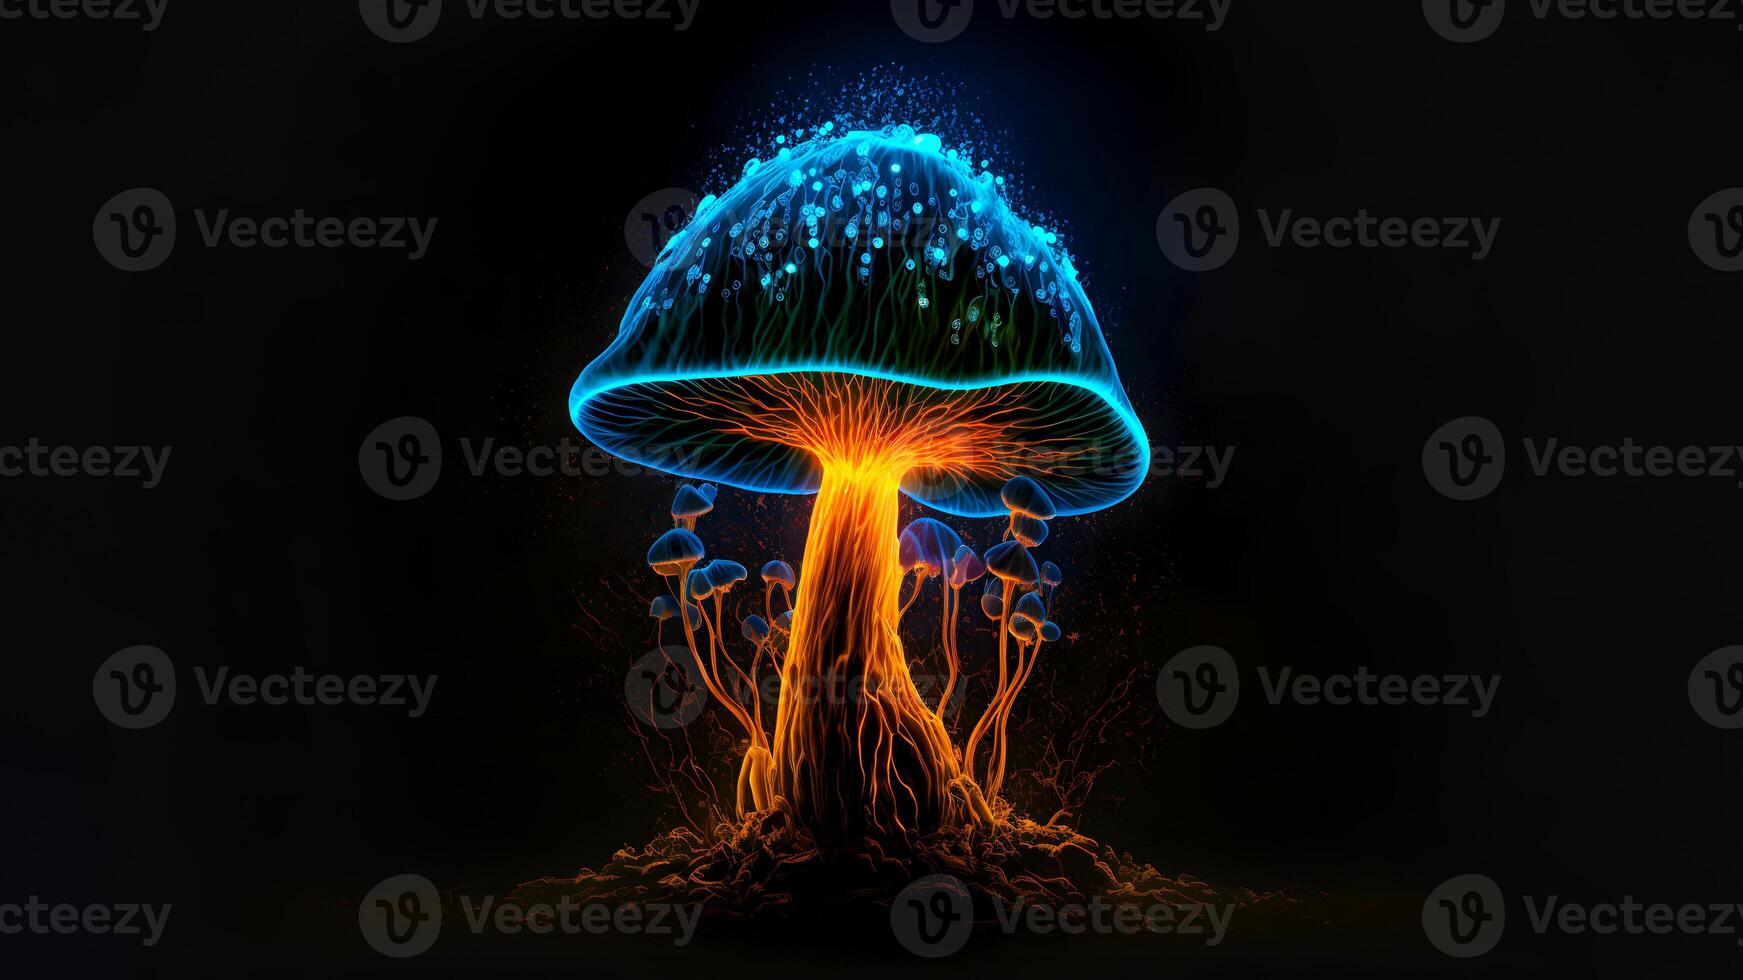 AI generated glowing magic mushroom on black background, neural network generated art photo